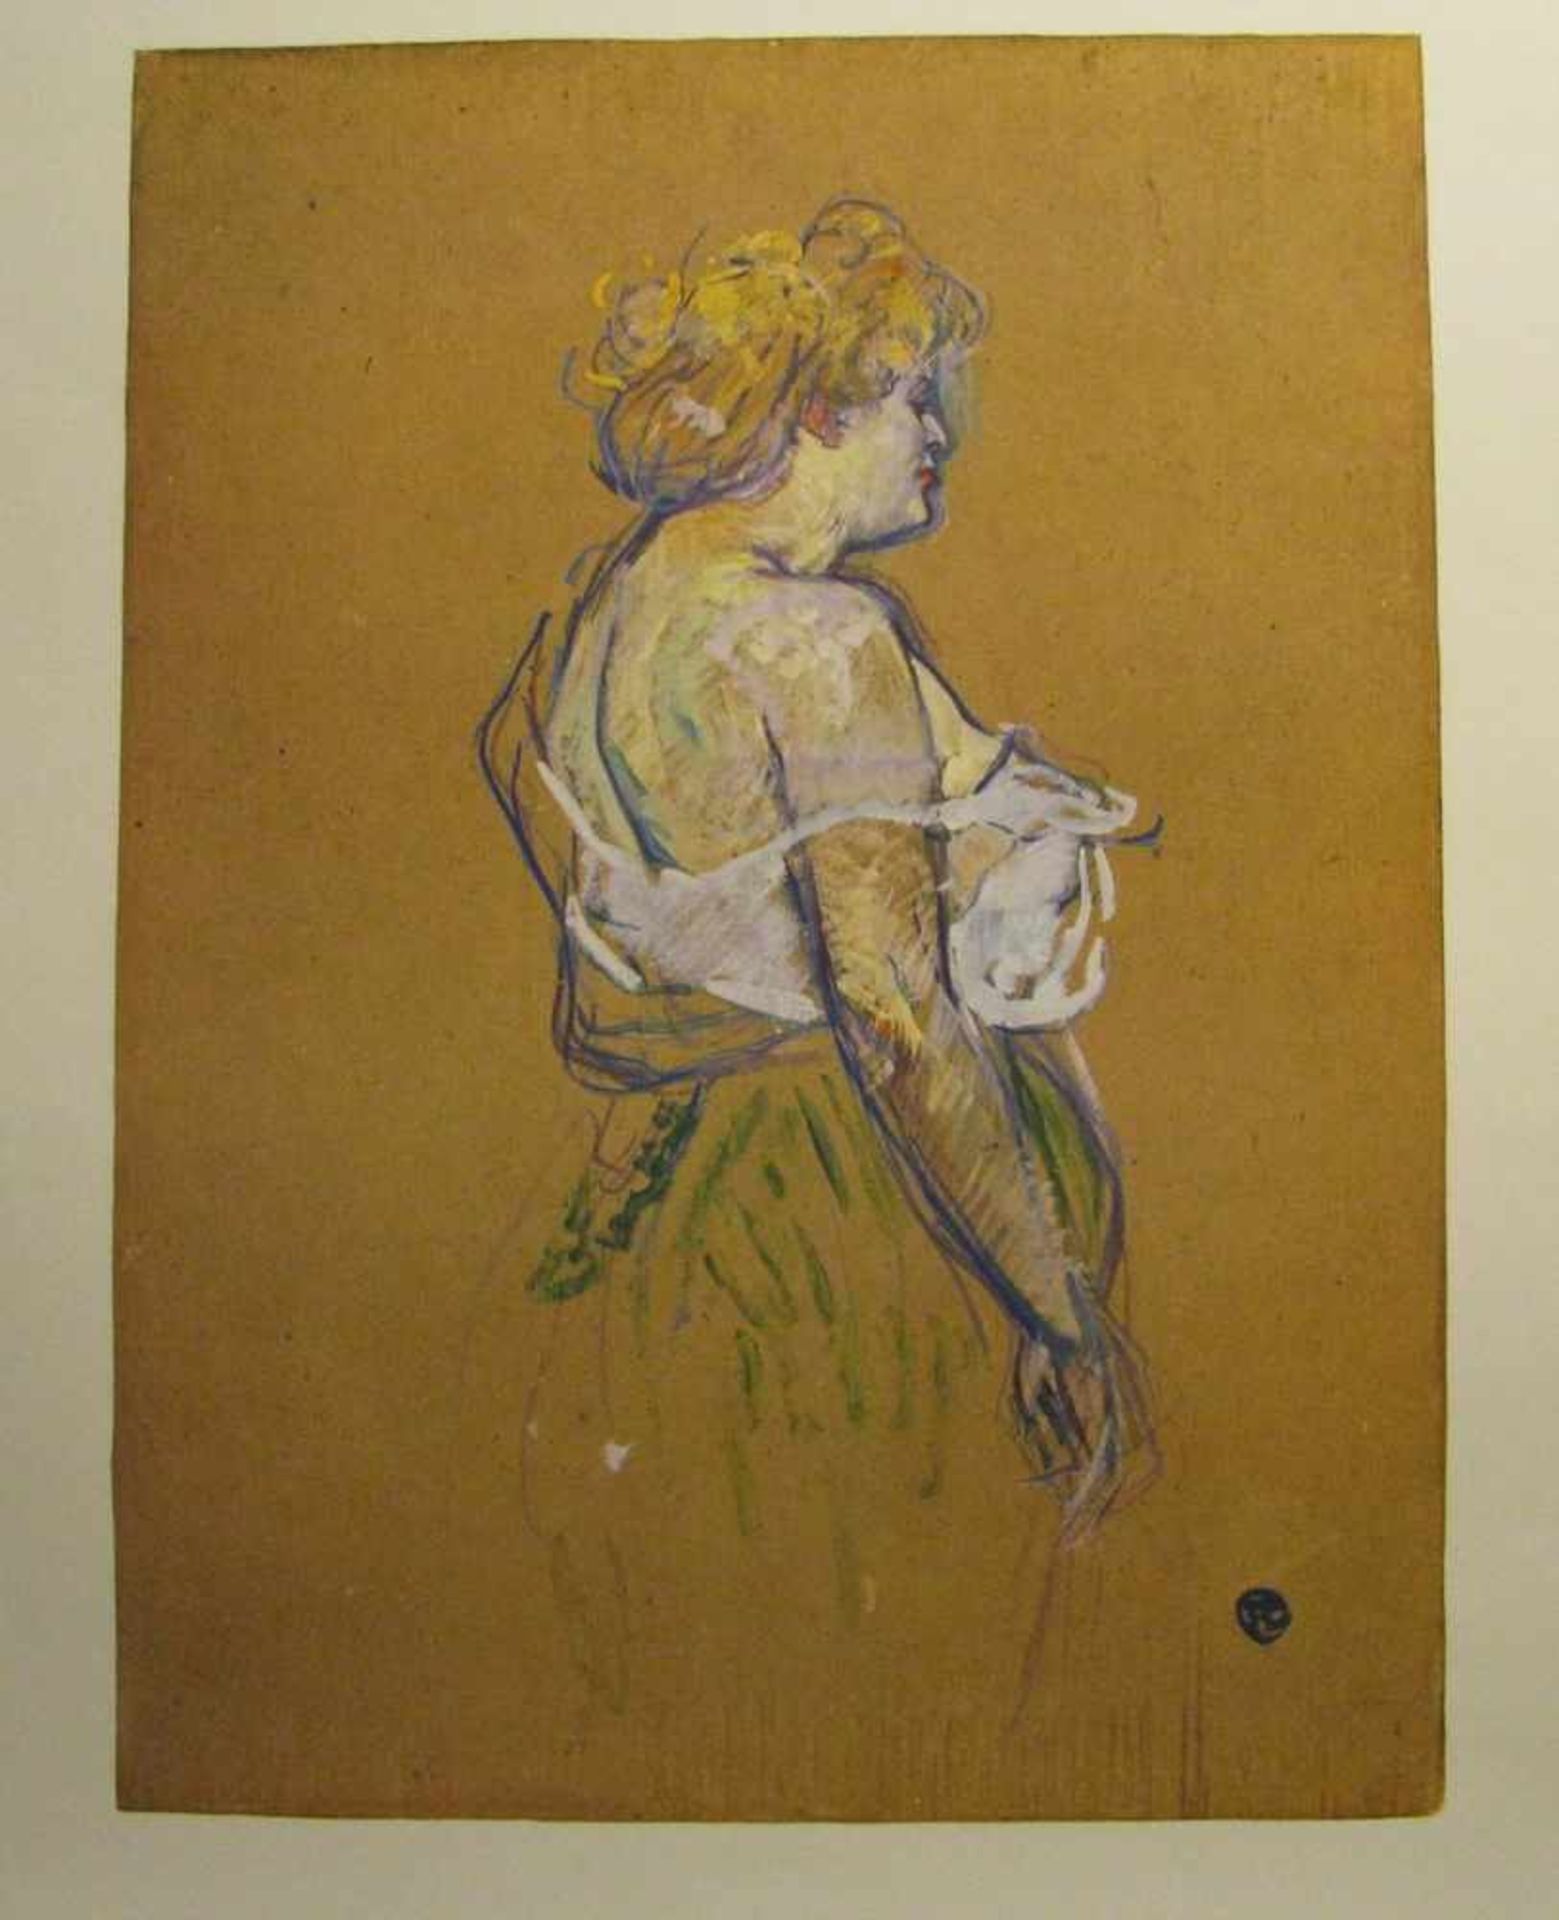 2 Kunstdrucke von Henri de Toulouse-Lautrec, 78 x 58,5 cm, o.R.- - -19.00 % buyer's premium on the